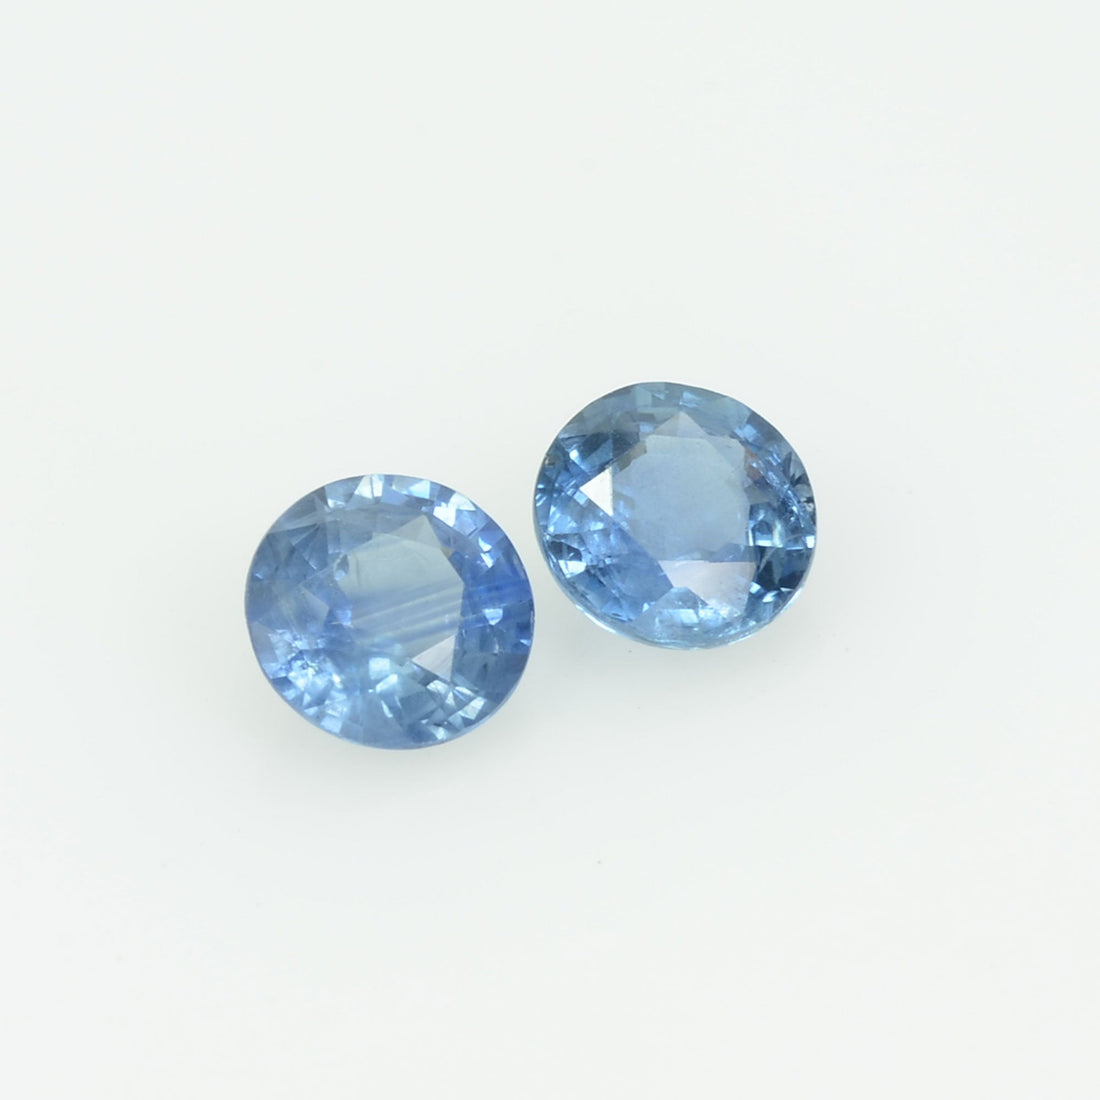 5 MM Natural Blue Sapphire Loose Pair Gemstone Round Cut - Thai Gems Export Ltd.